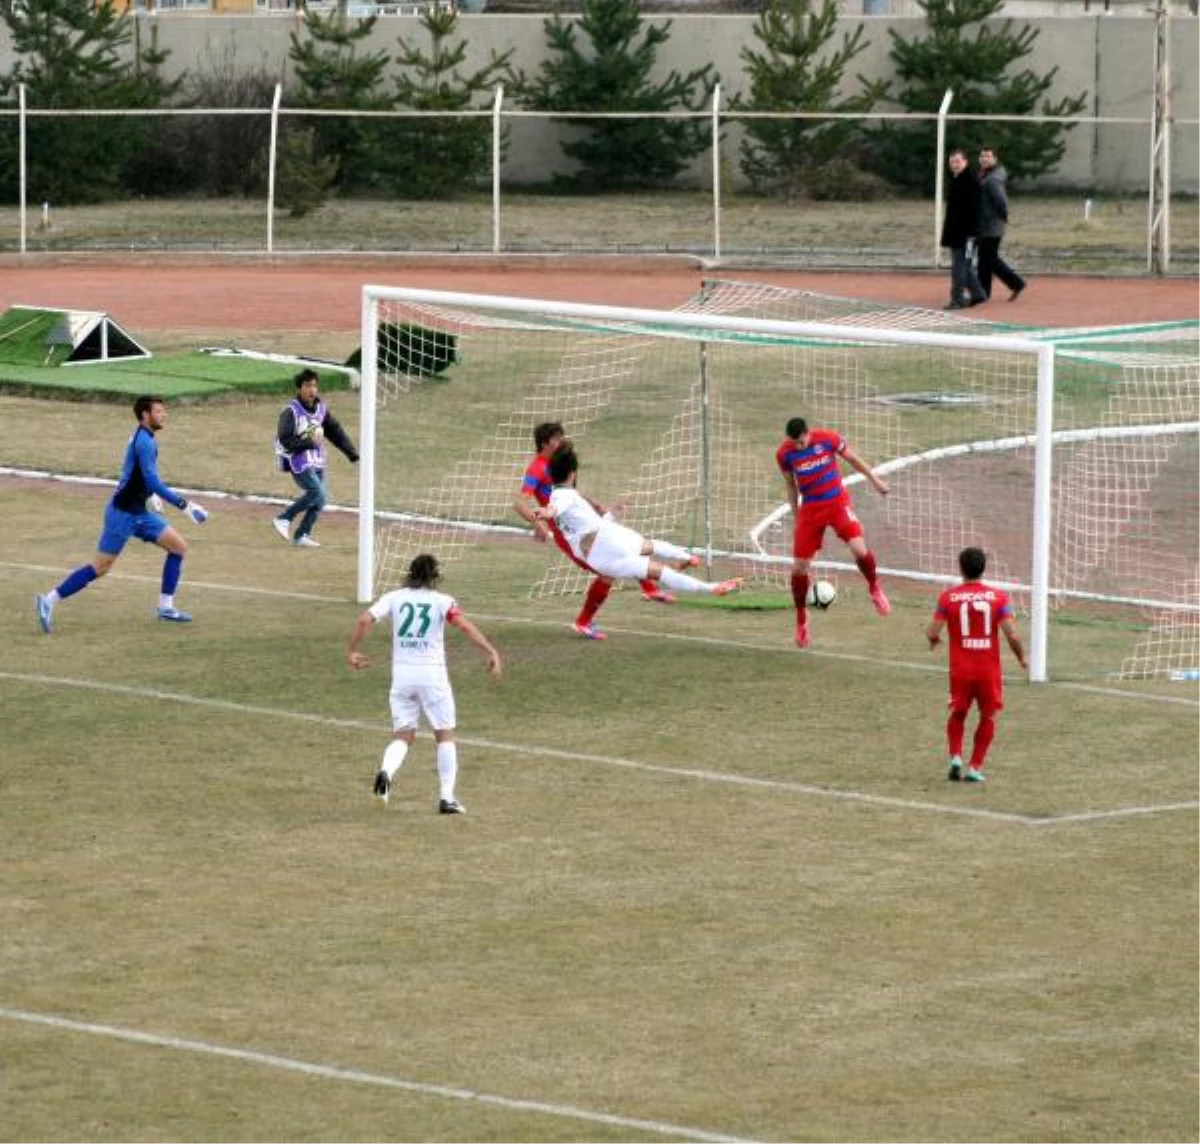 Erzincan Refahiyespor - Dardanelspor : 0-4